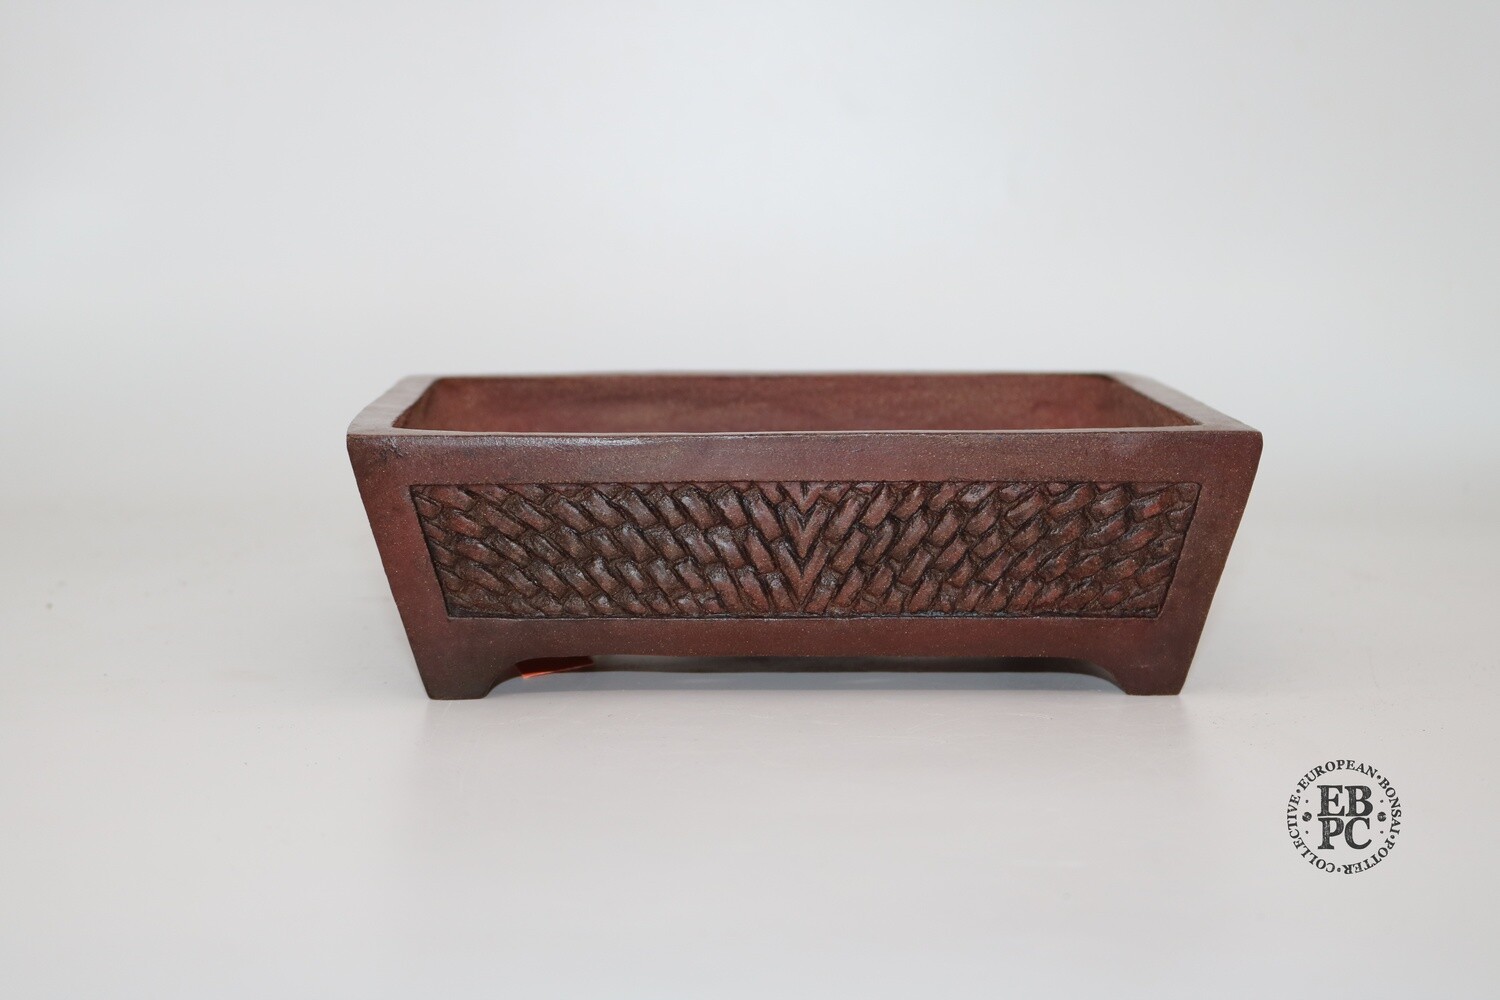 SOLD - M. J. G. Ceramica - 22.3cm; Unglazed; Rectangle; Inset Panel with 'Latticed Weave' Pattern; Reddish-brown Clay Finish; Maria Jose Gonzalez